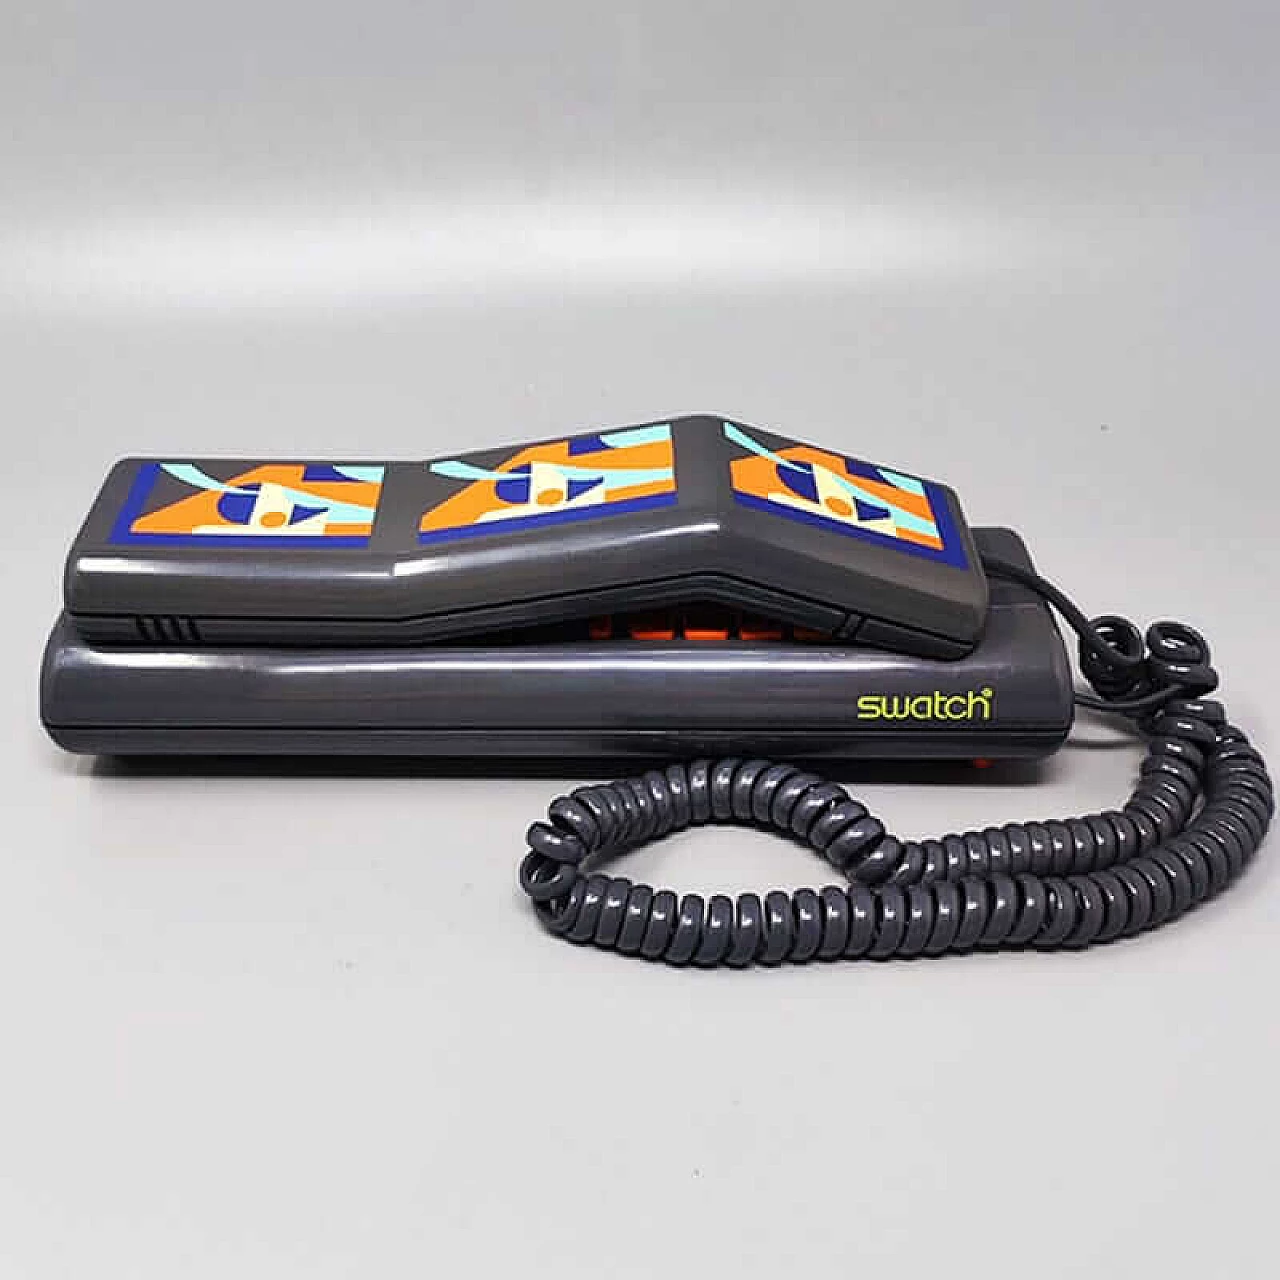 Deco Swatch Twin Phone landline phone, 1980s 3